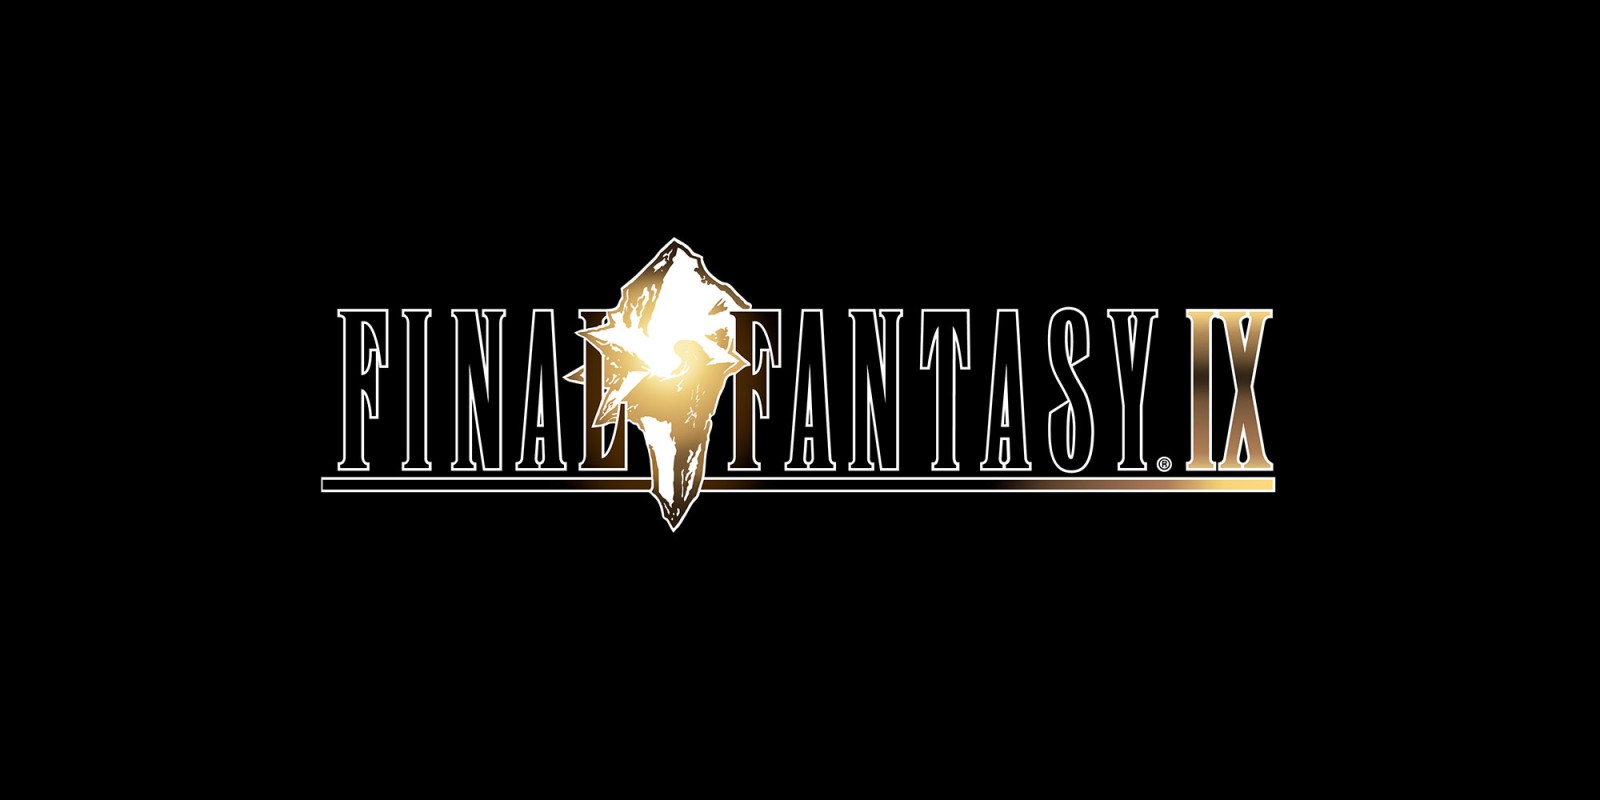 Final Fantasy IX Switch launch trailer.